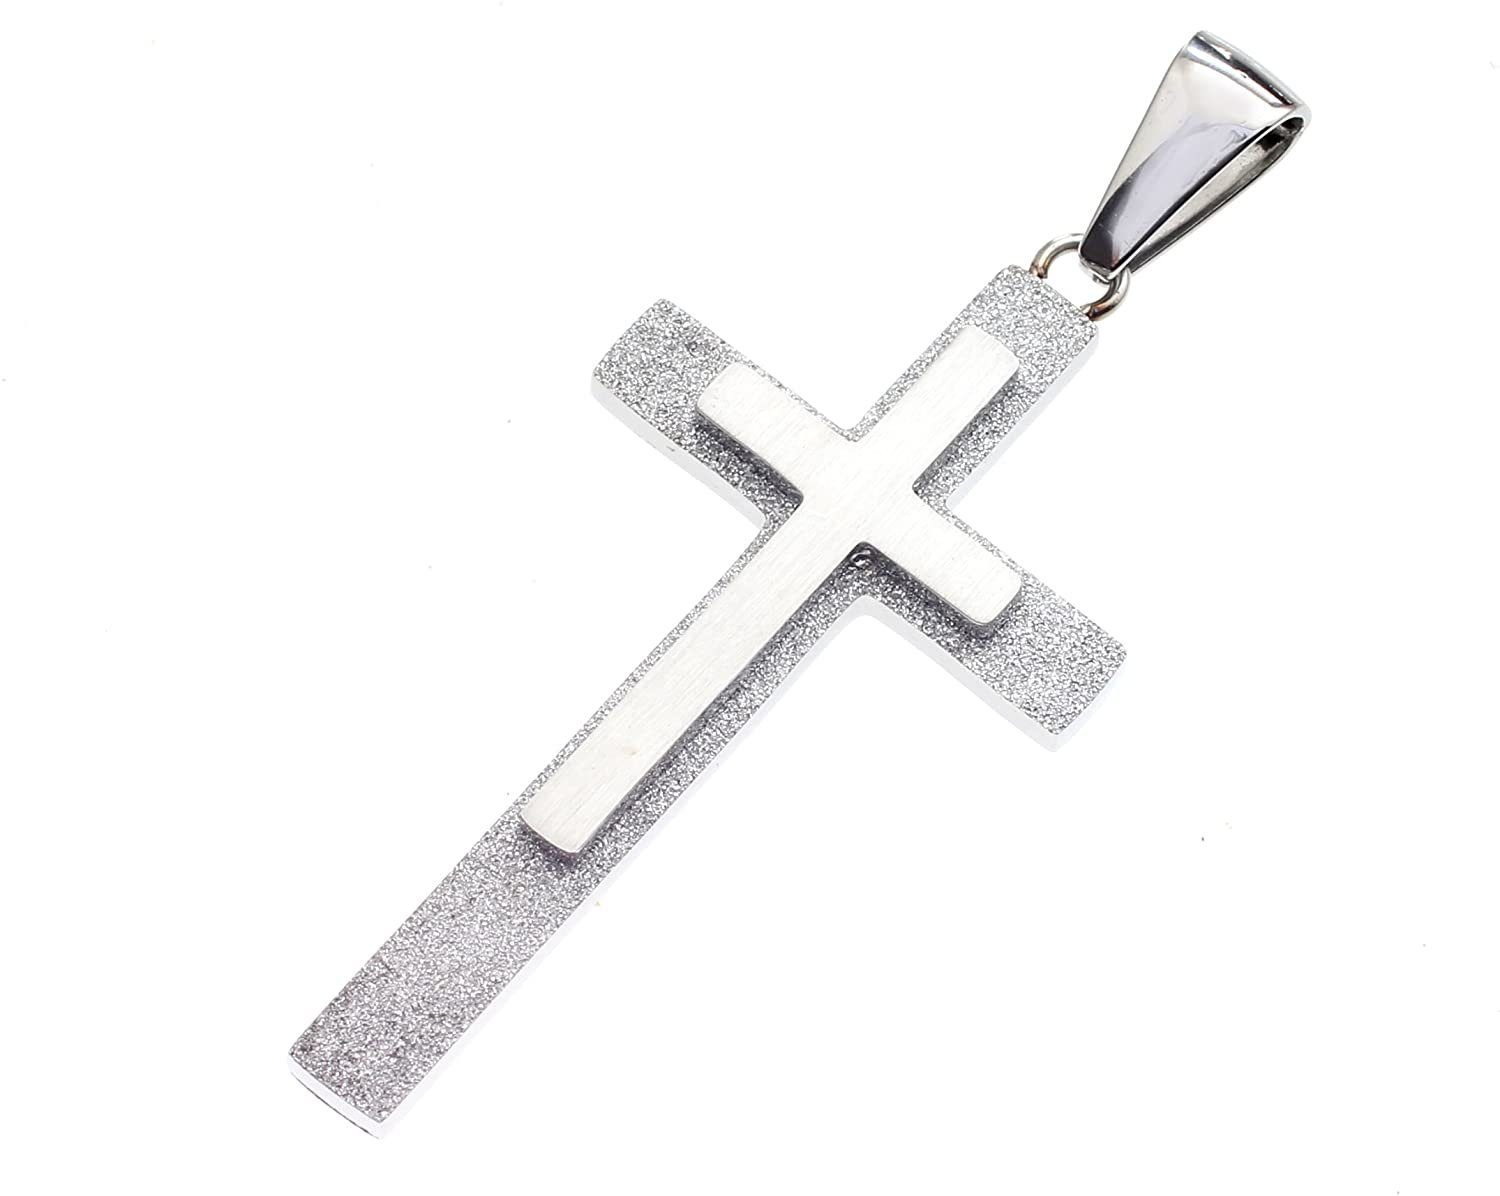 Karisma Kette mit Anhänger Edelstahl Kreuz Anhänger Silber Look und Edelstahl Kette - YSP261 - 45.0 Zentimeter